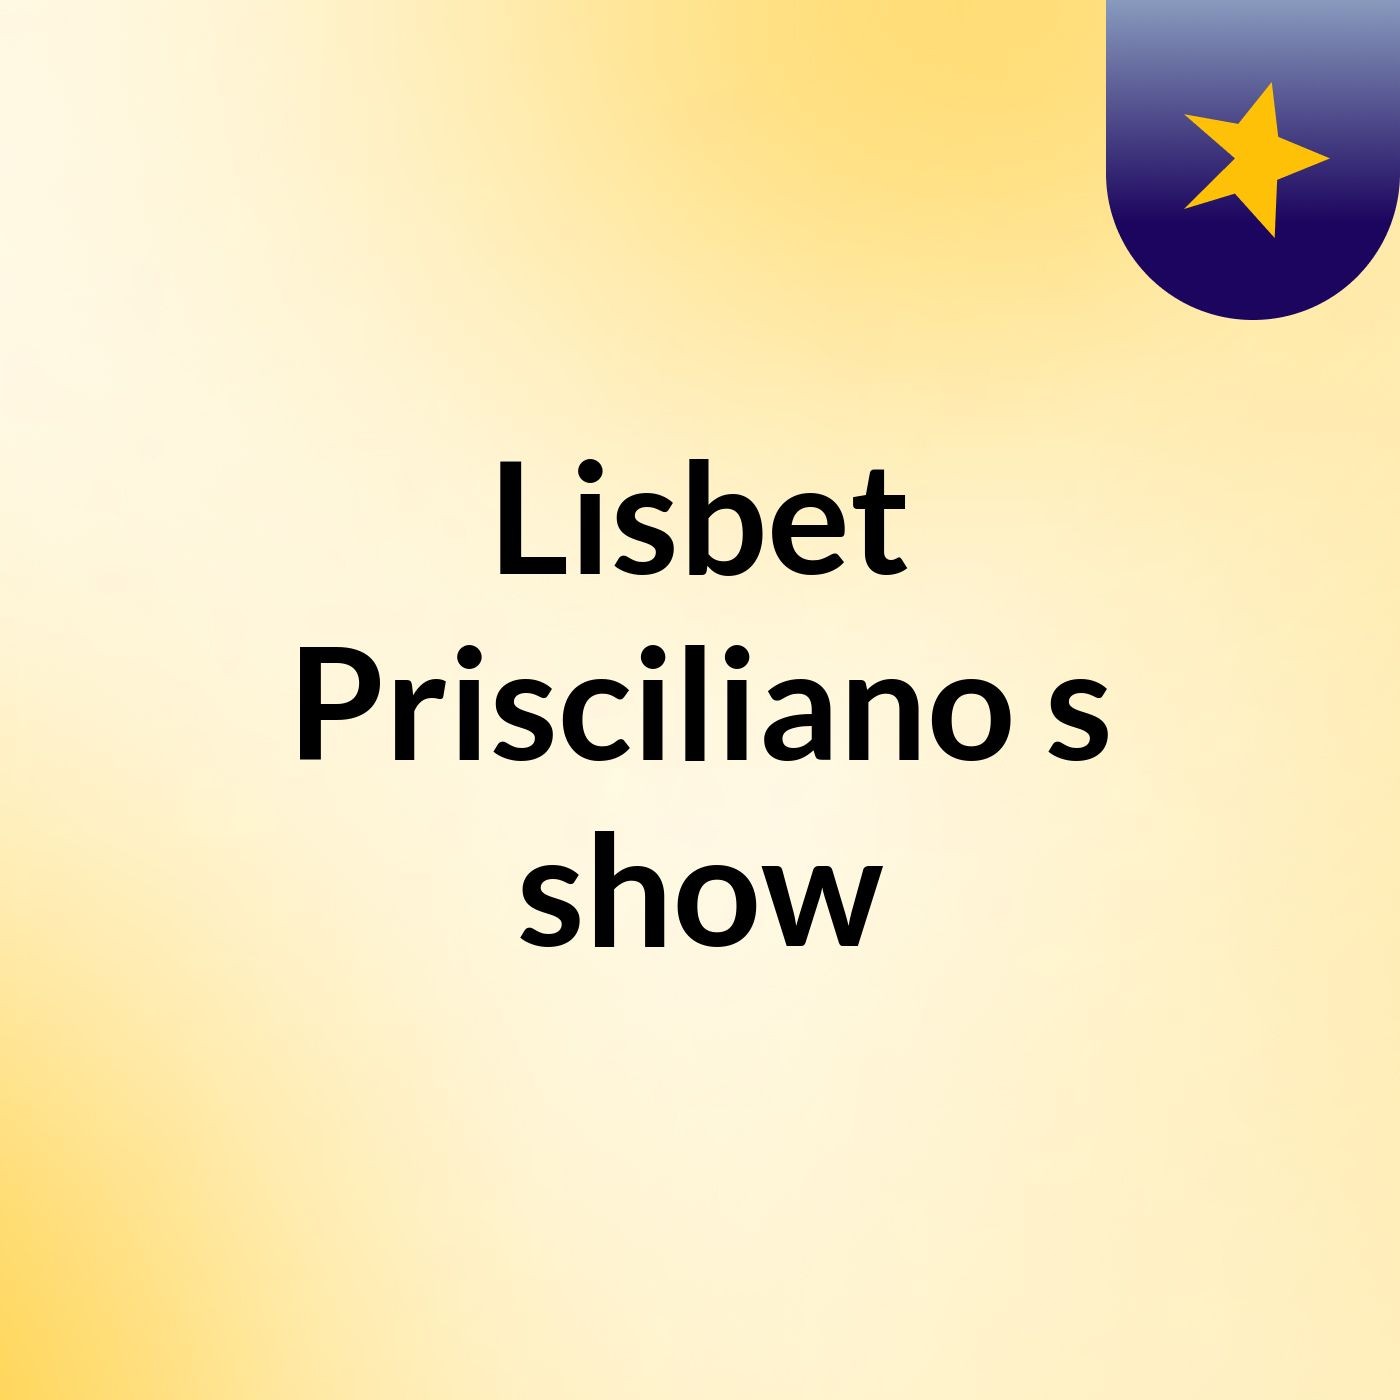 Lisbet Prisciliano's show